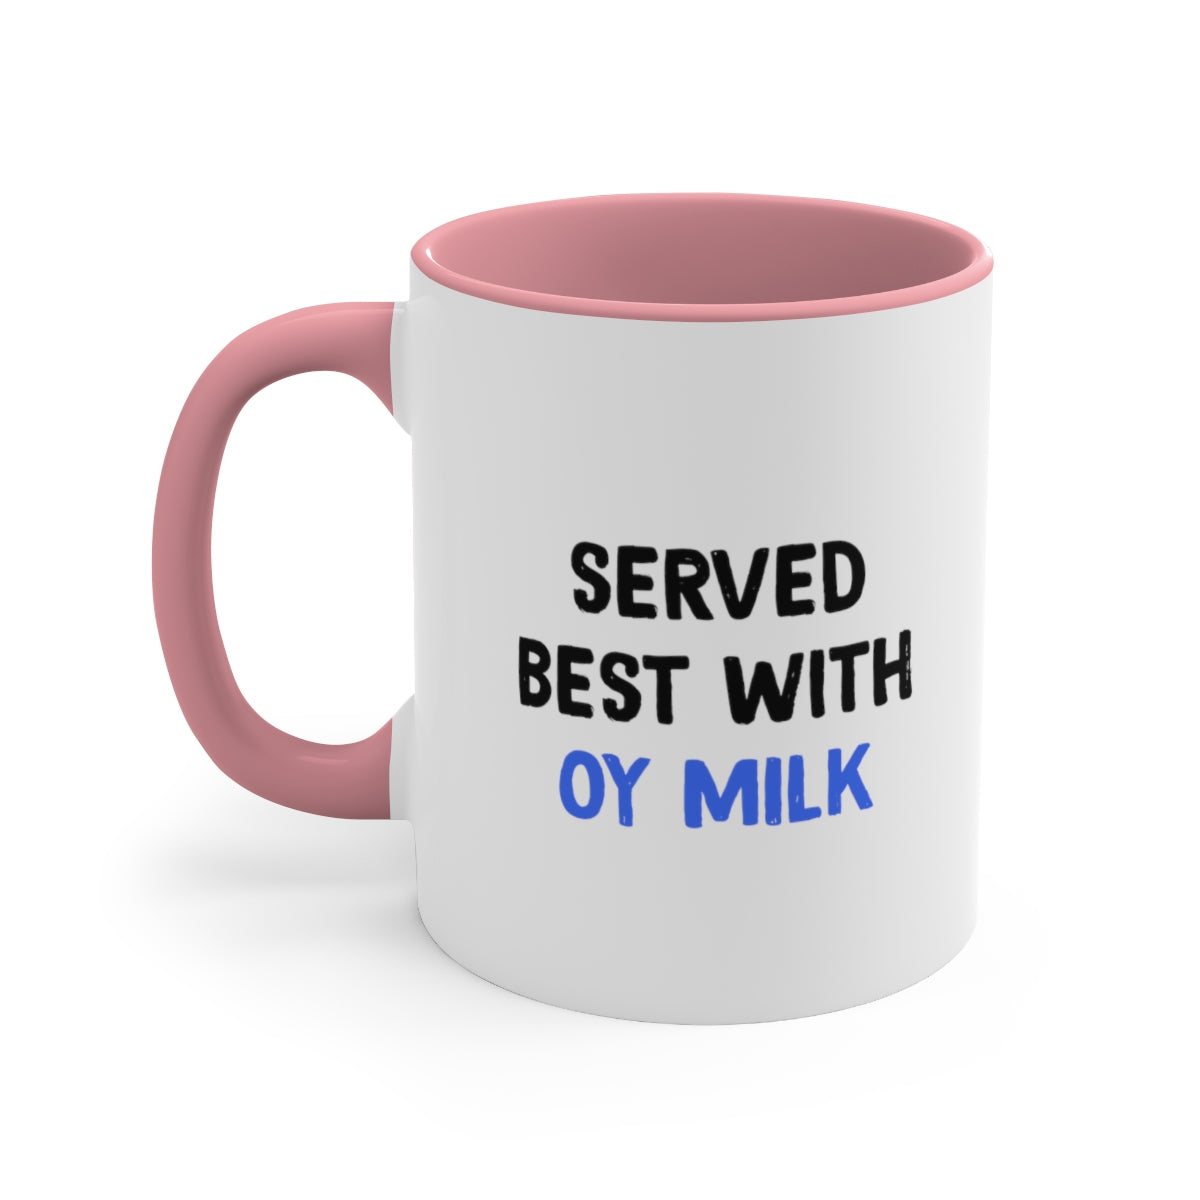 Oy Milk Mug